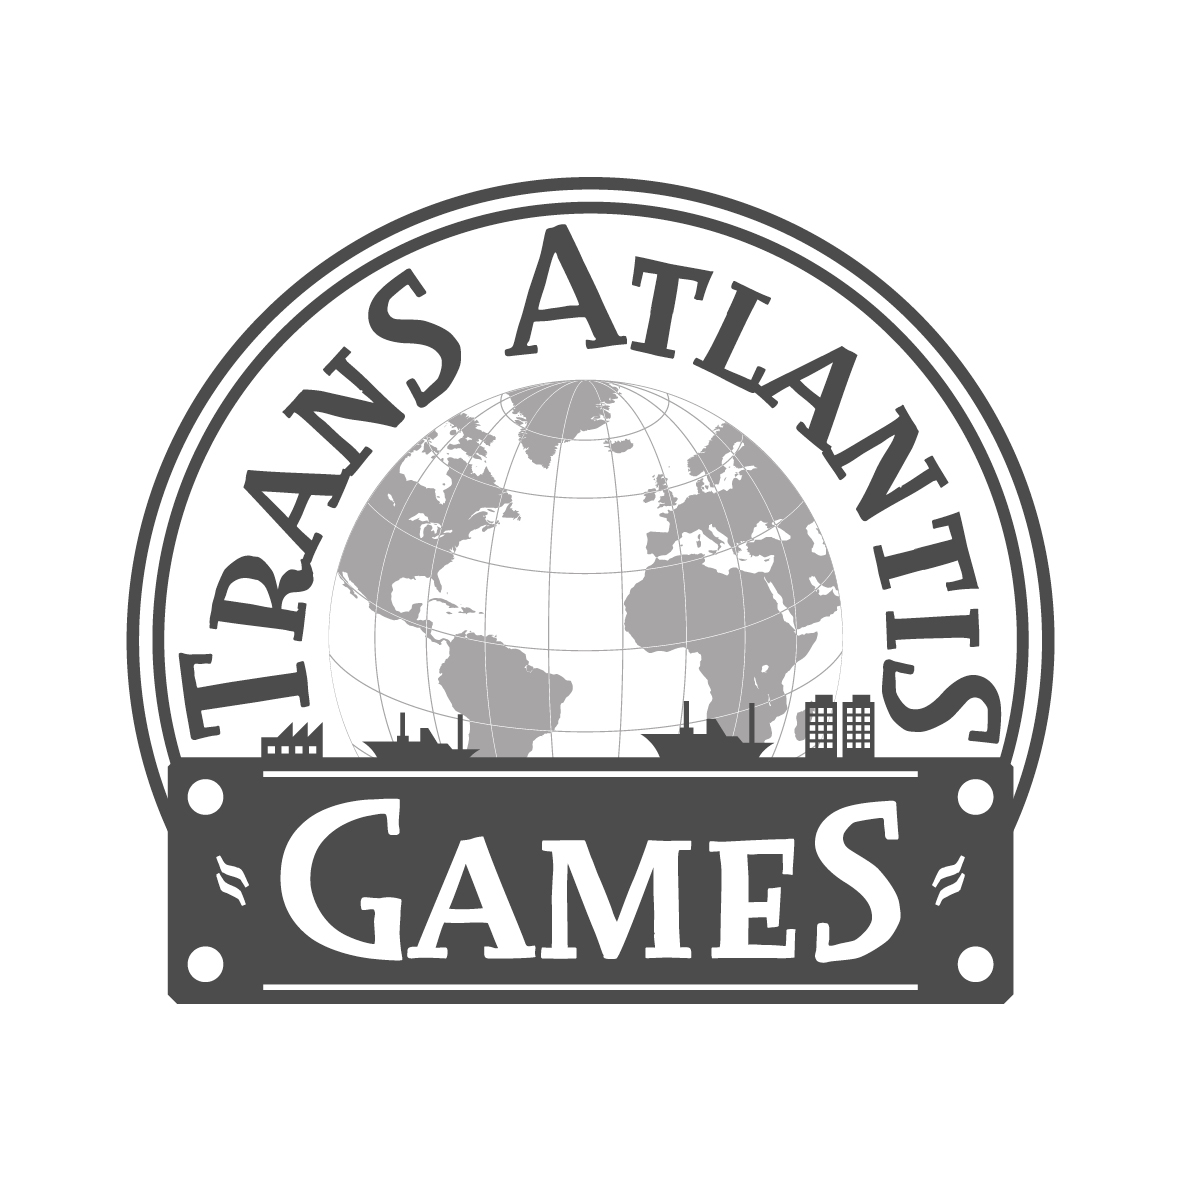 Trans Atlantis Games